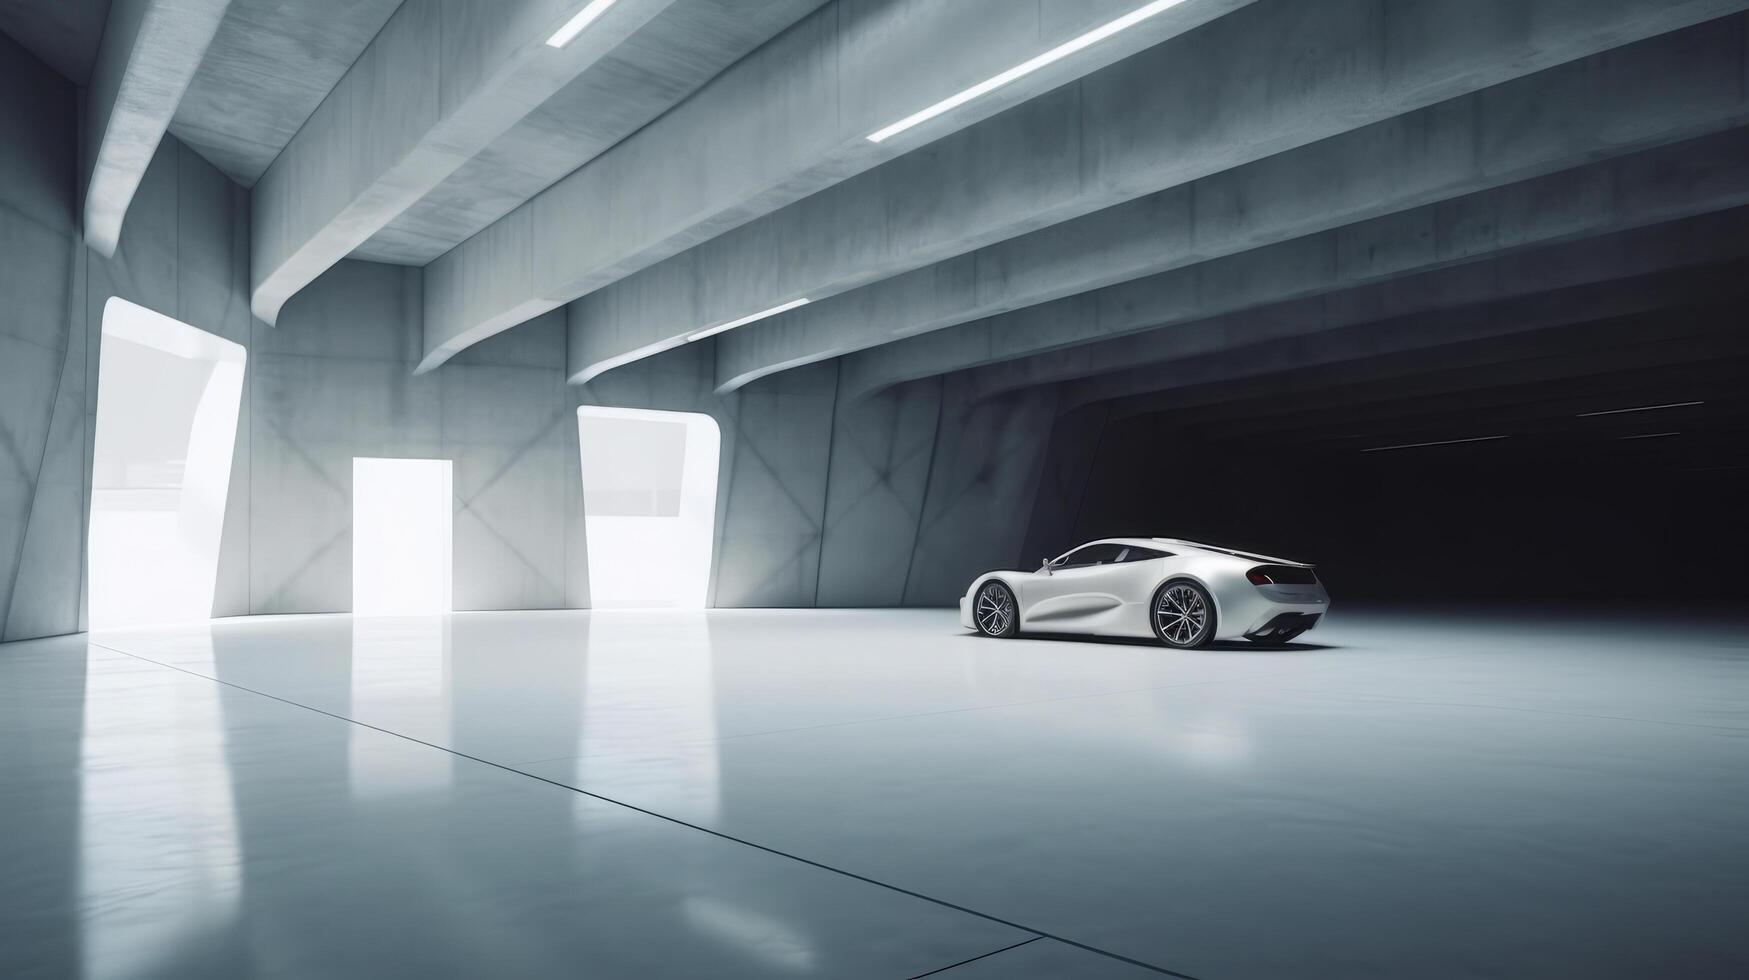 Futuristic background with car. Illustration photo